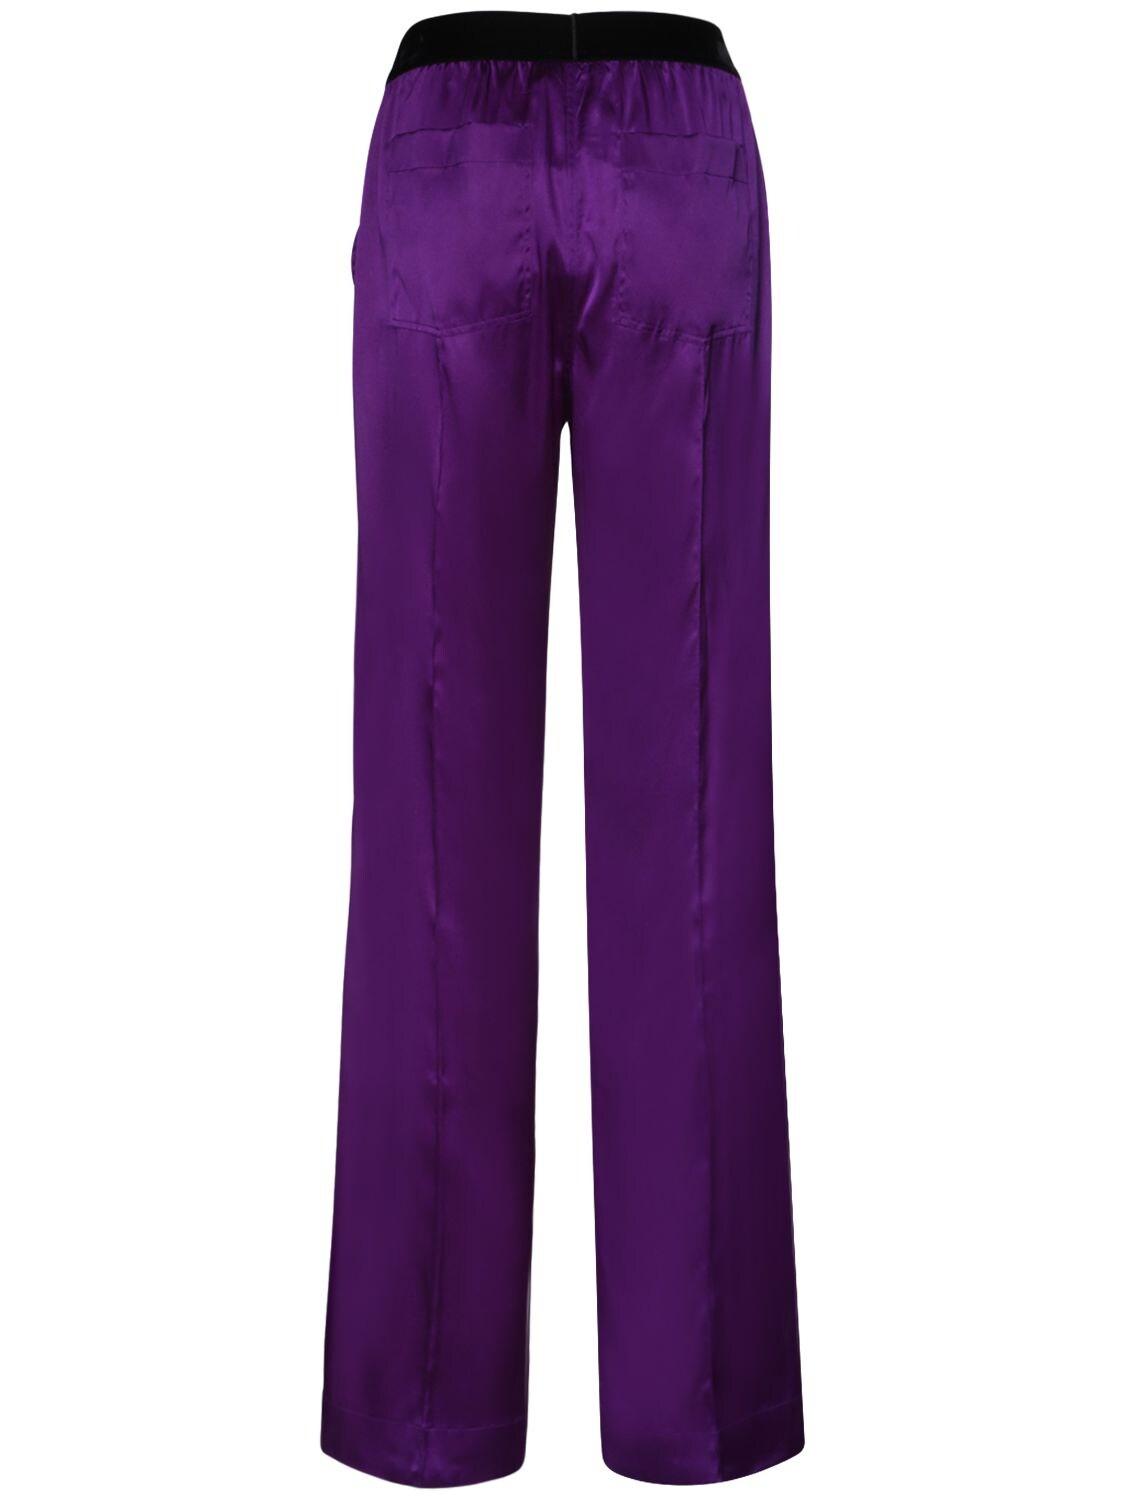 Tom Ford Logo Silk Satin Pajama Pants in Purple - Save 67% | Lyst